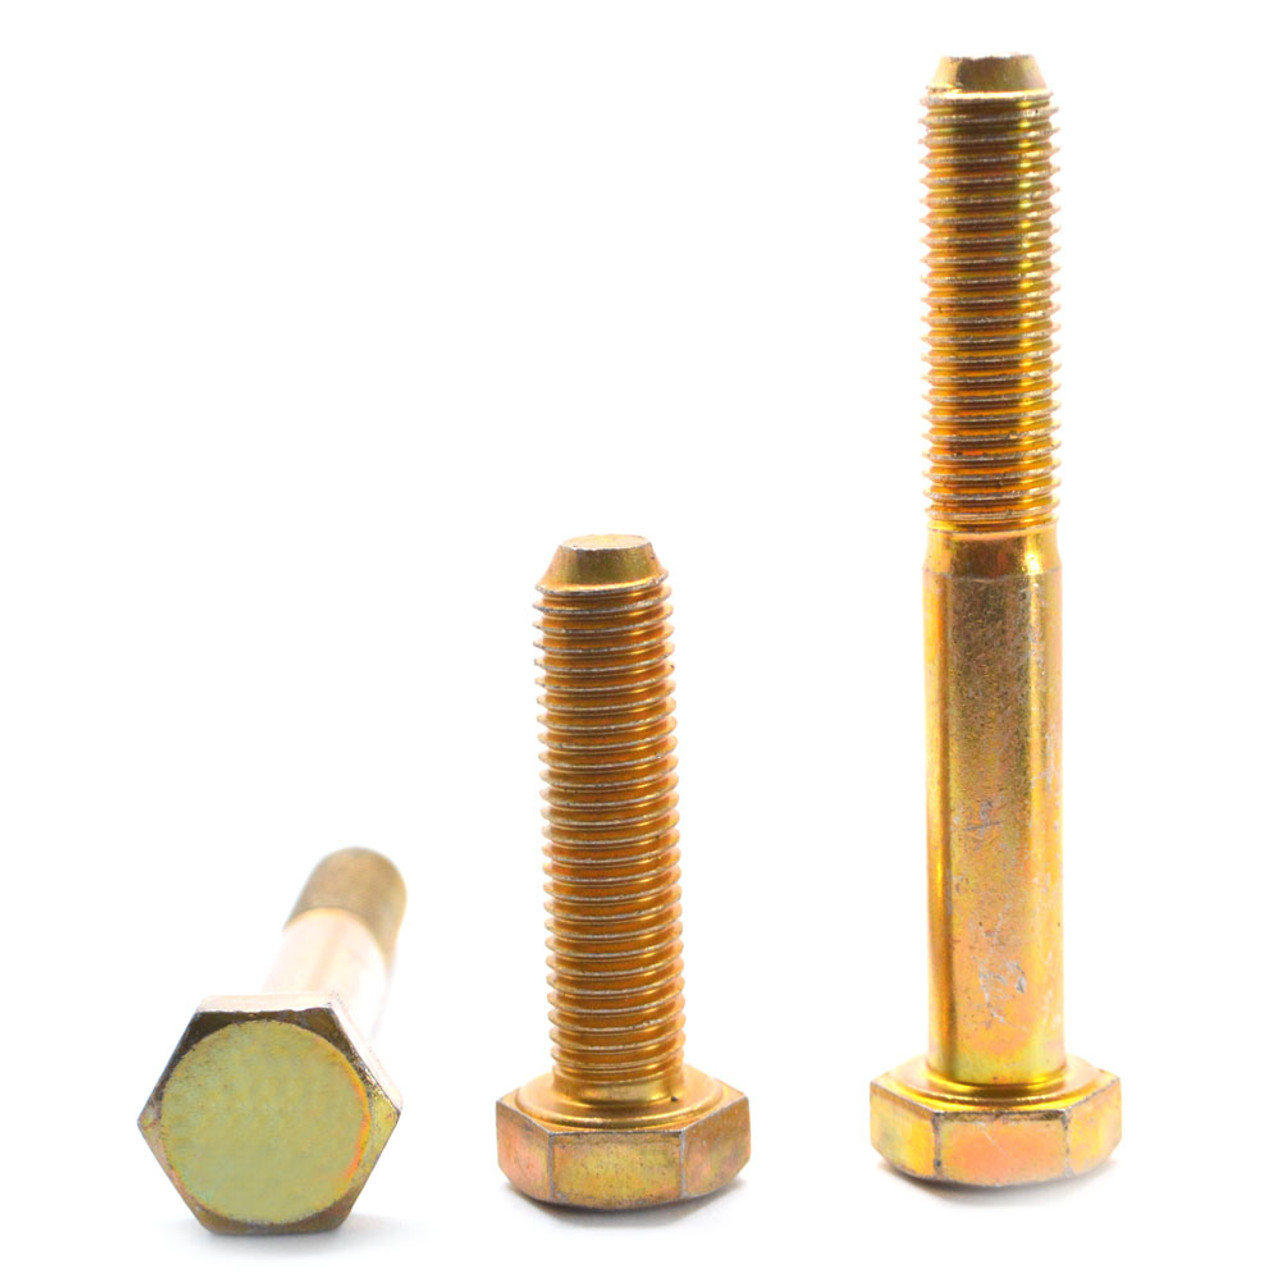 7/16"-14 x 1" (FT) Coarse Thread Grade 8 Hex Cap Screw (Bolt) Alloy Steel Yellow Zinc Plated